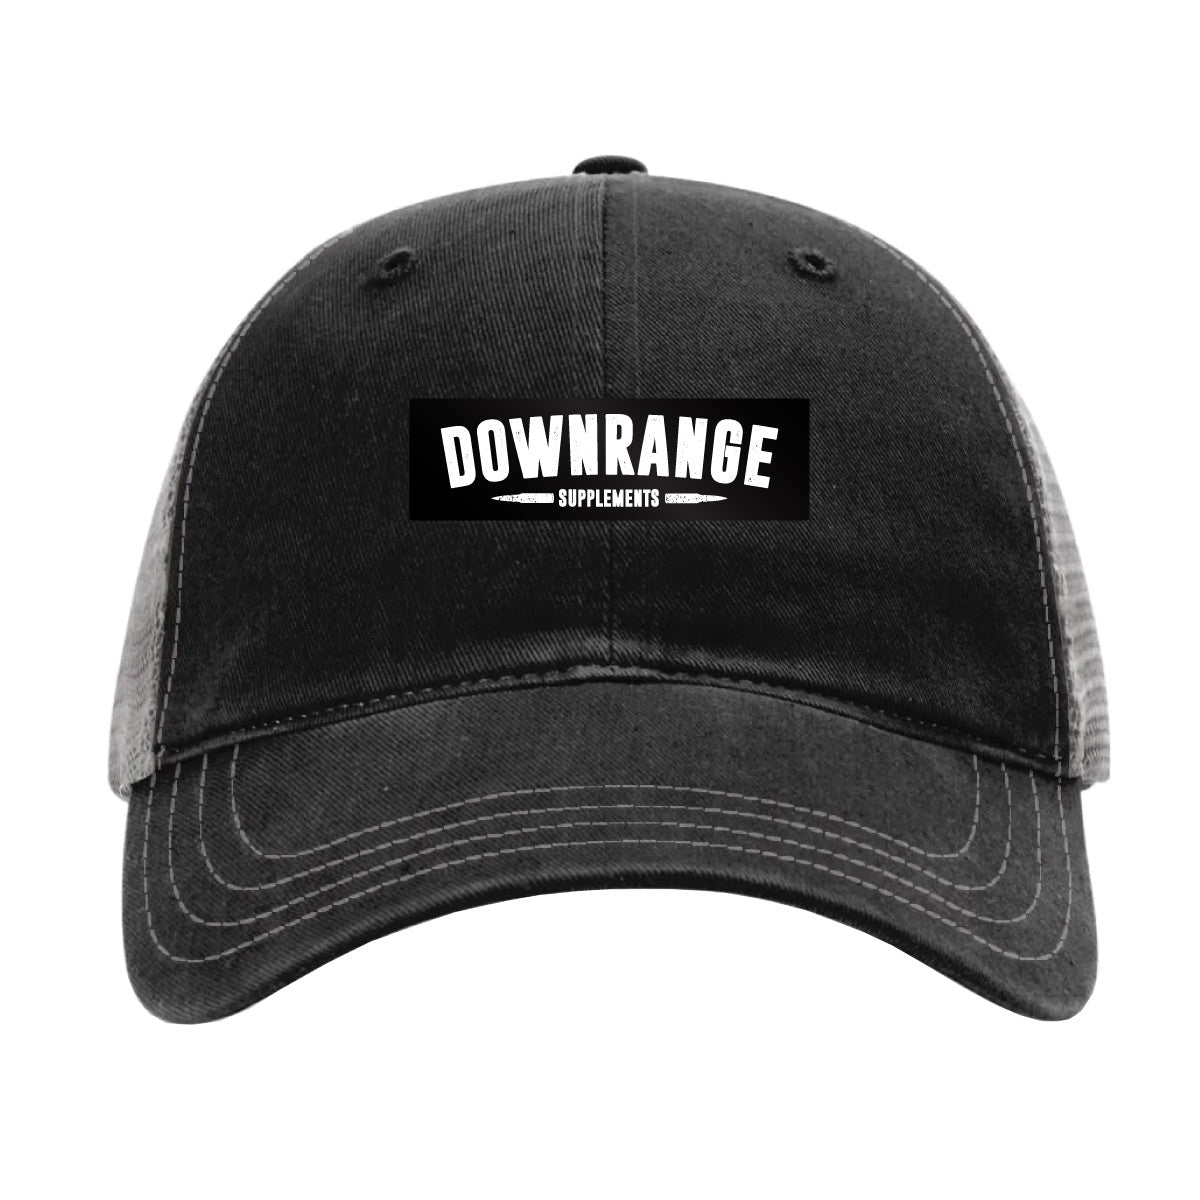 DOWNRANGE HAT - DownRange Supplements